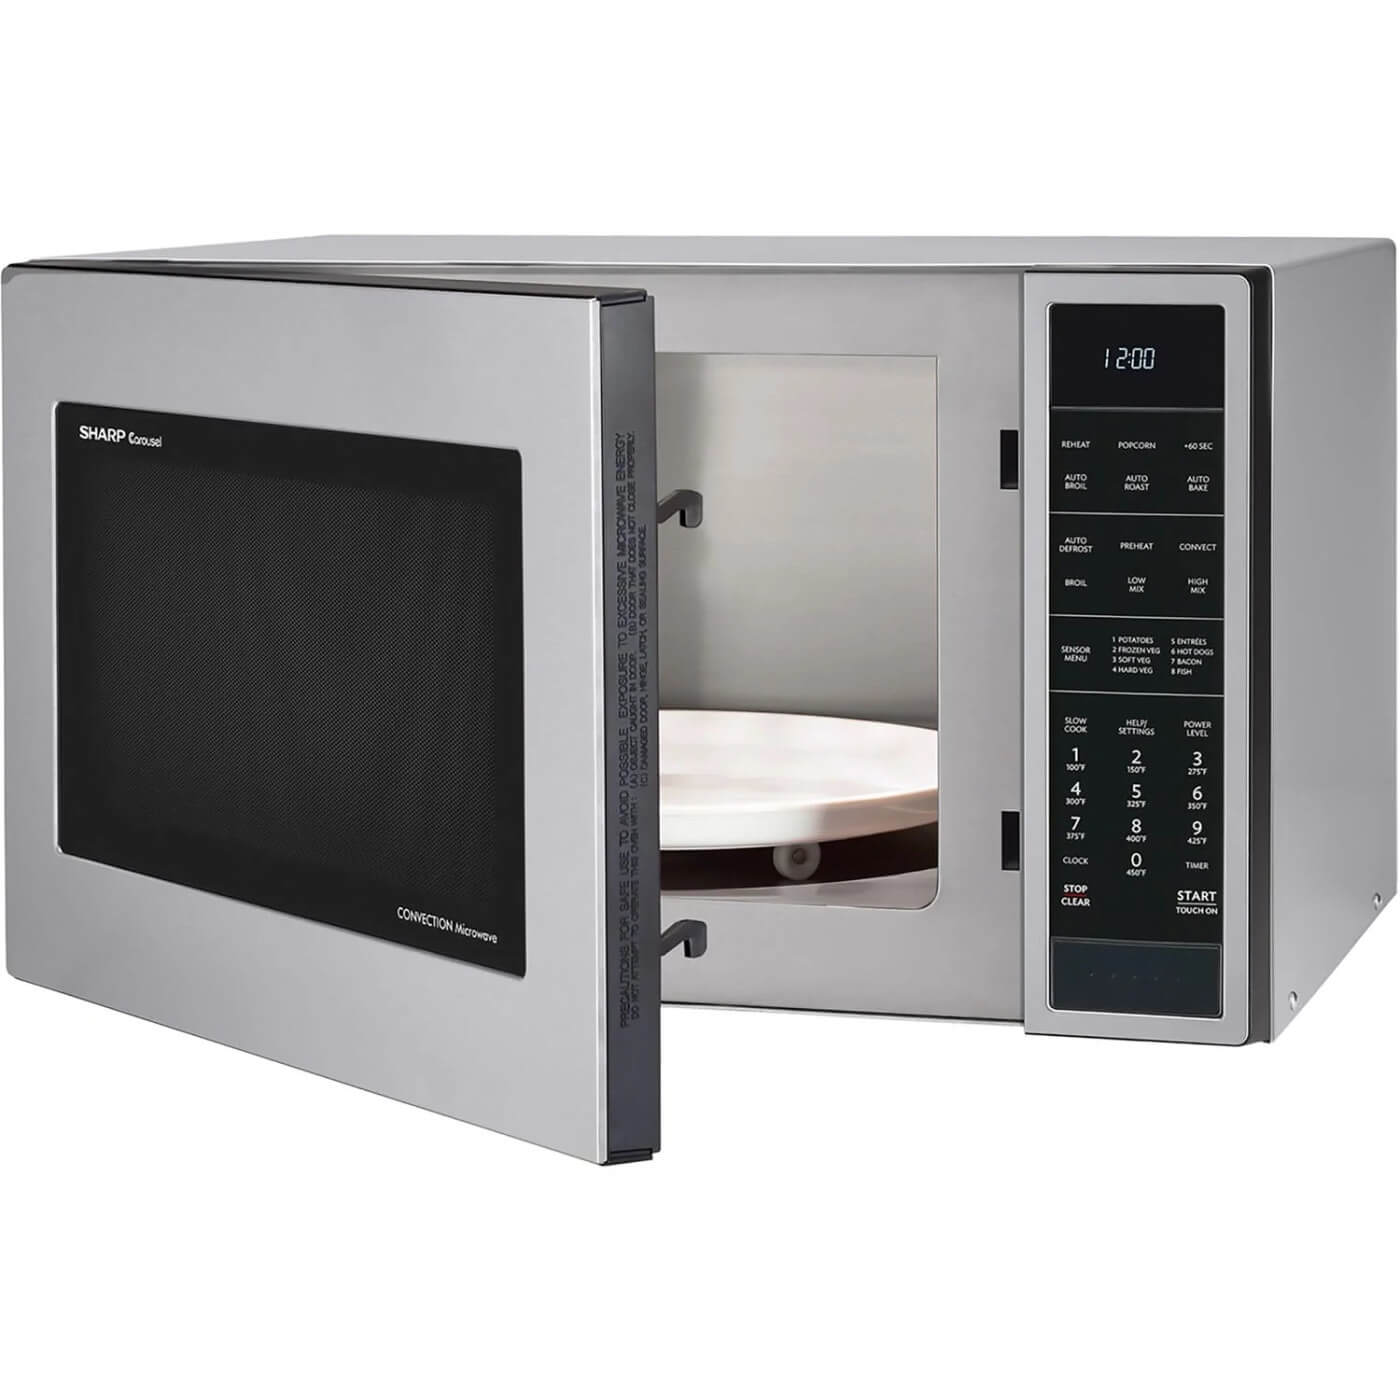 Best Appliance Brands Sharp Microwaves